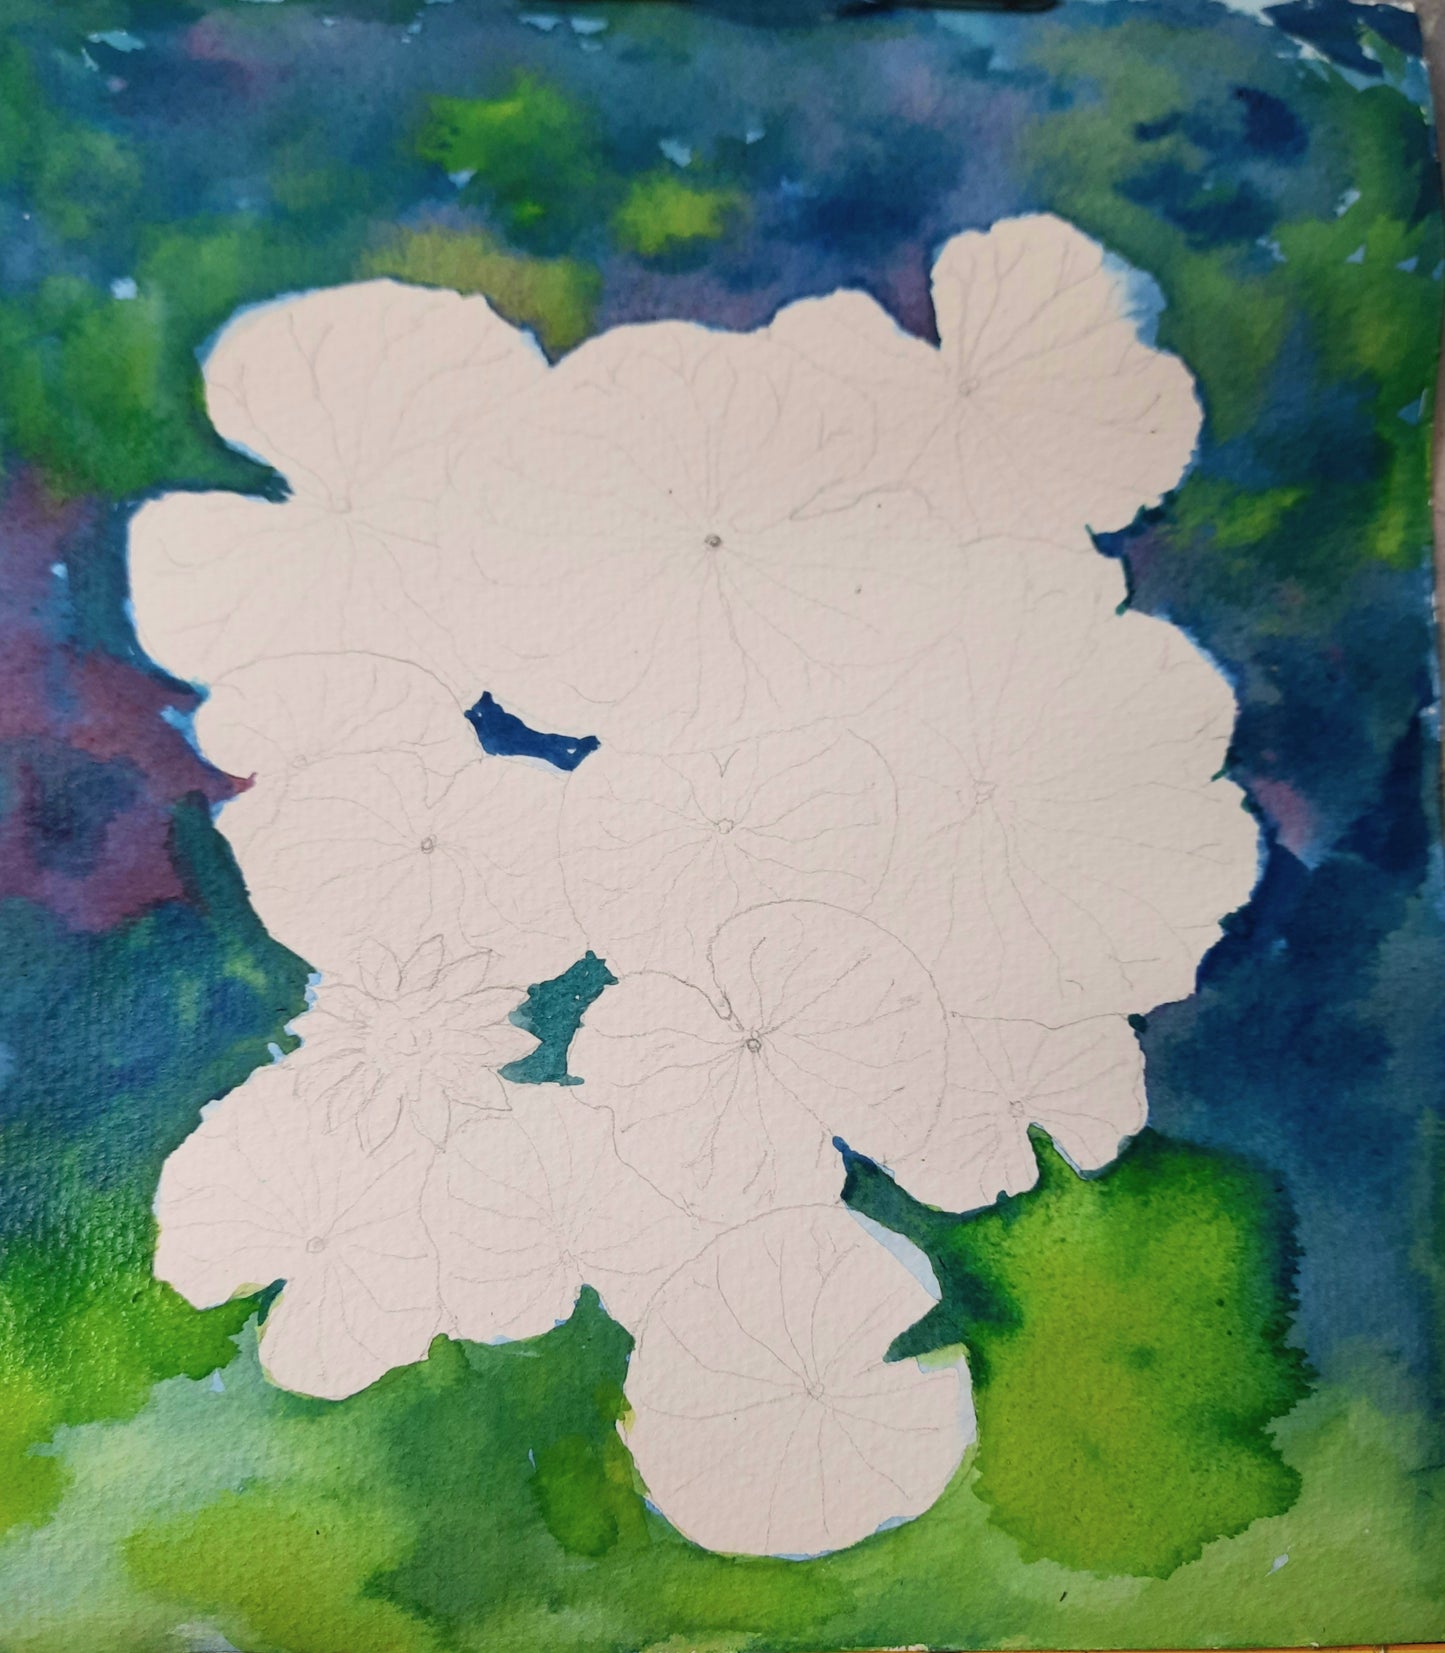 Work in progress, Lotus Pond watercolor painting